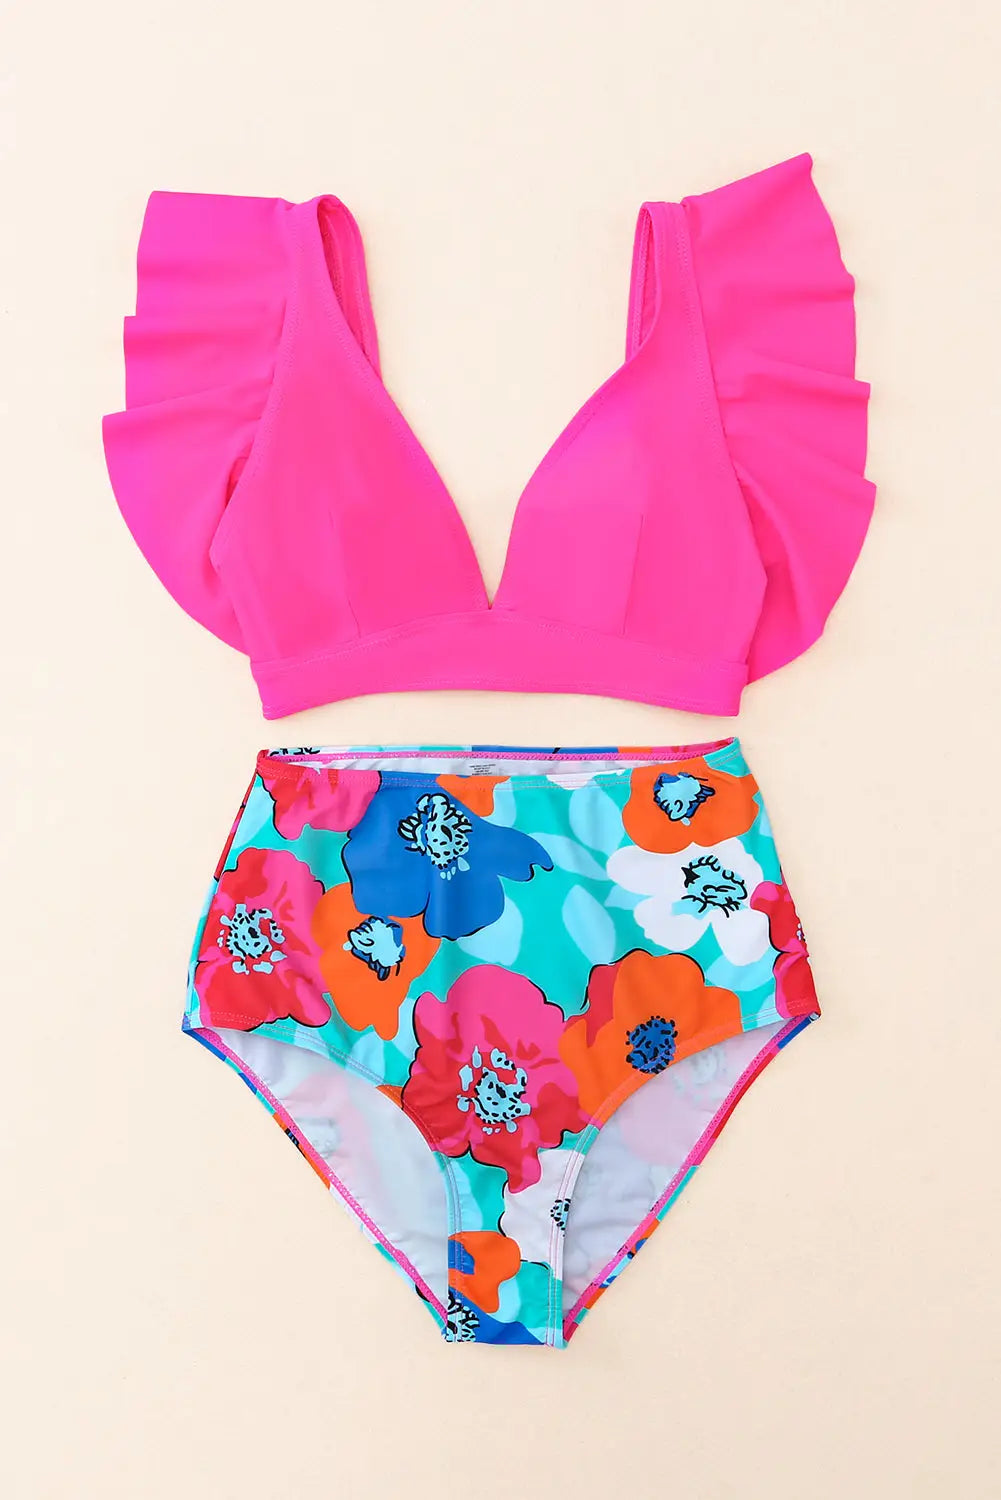 Rose v neck ruffles floral print high waist bikini - swimsuits